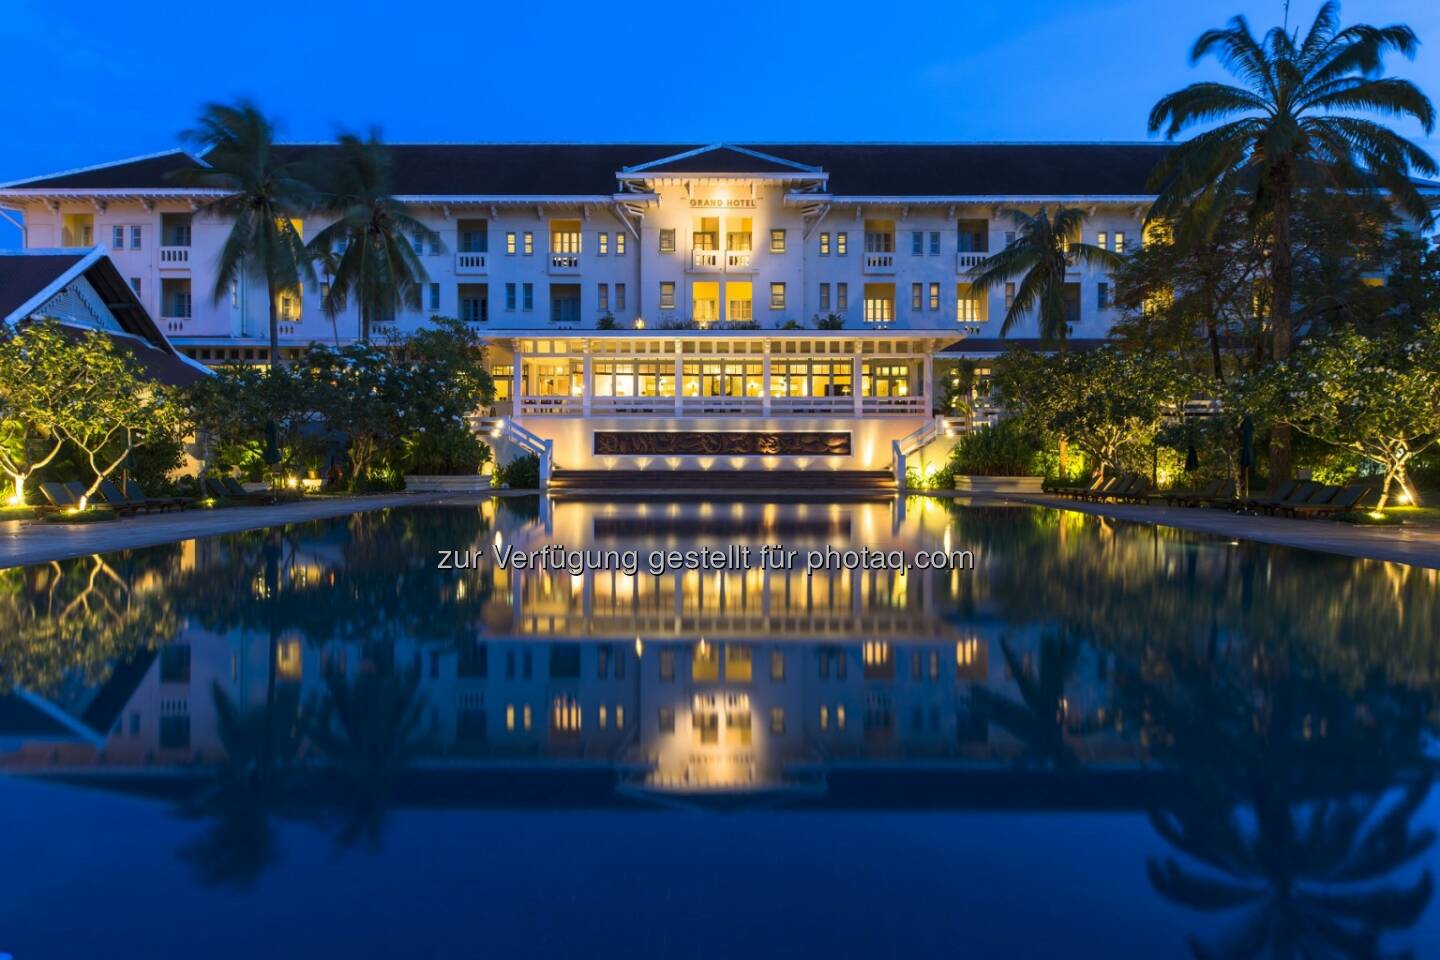 Raffles Grand Hotel d'Angkor Siem Reap in Cambodia : Accorhotels übernimmt globale Luxusmarken Fairmont, Raffles und Swissôtel : Fotocredit: Raffles/John McDermott